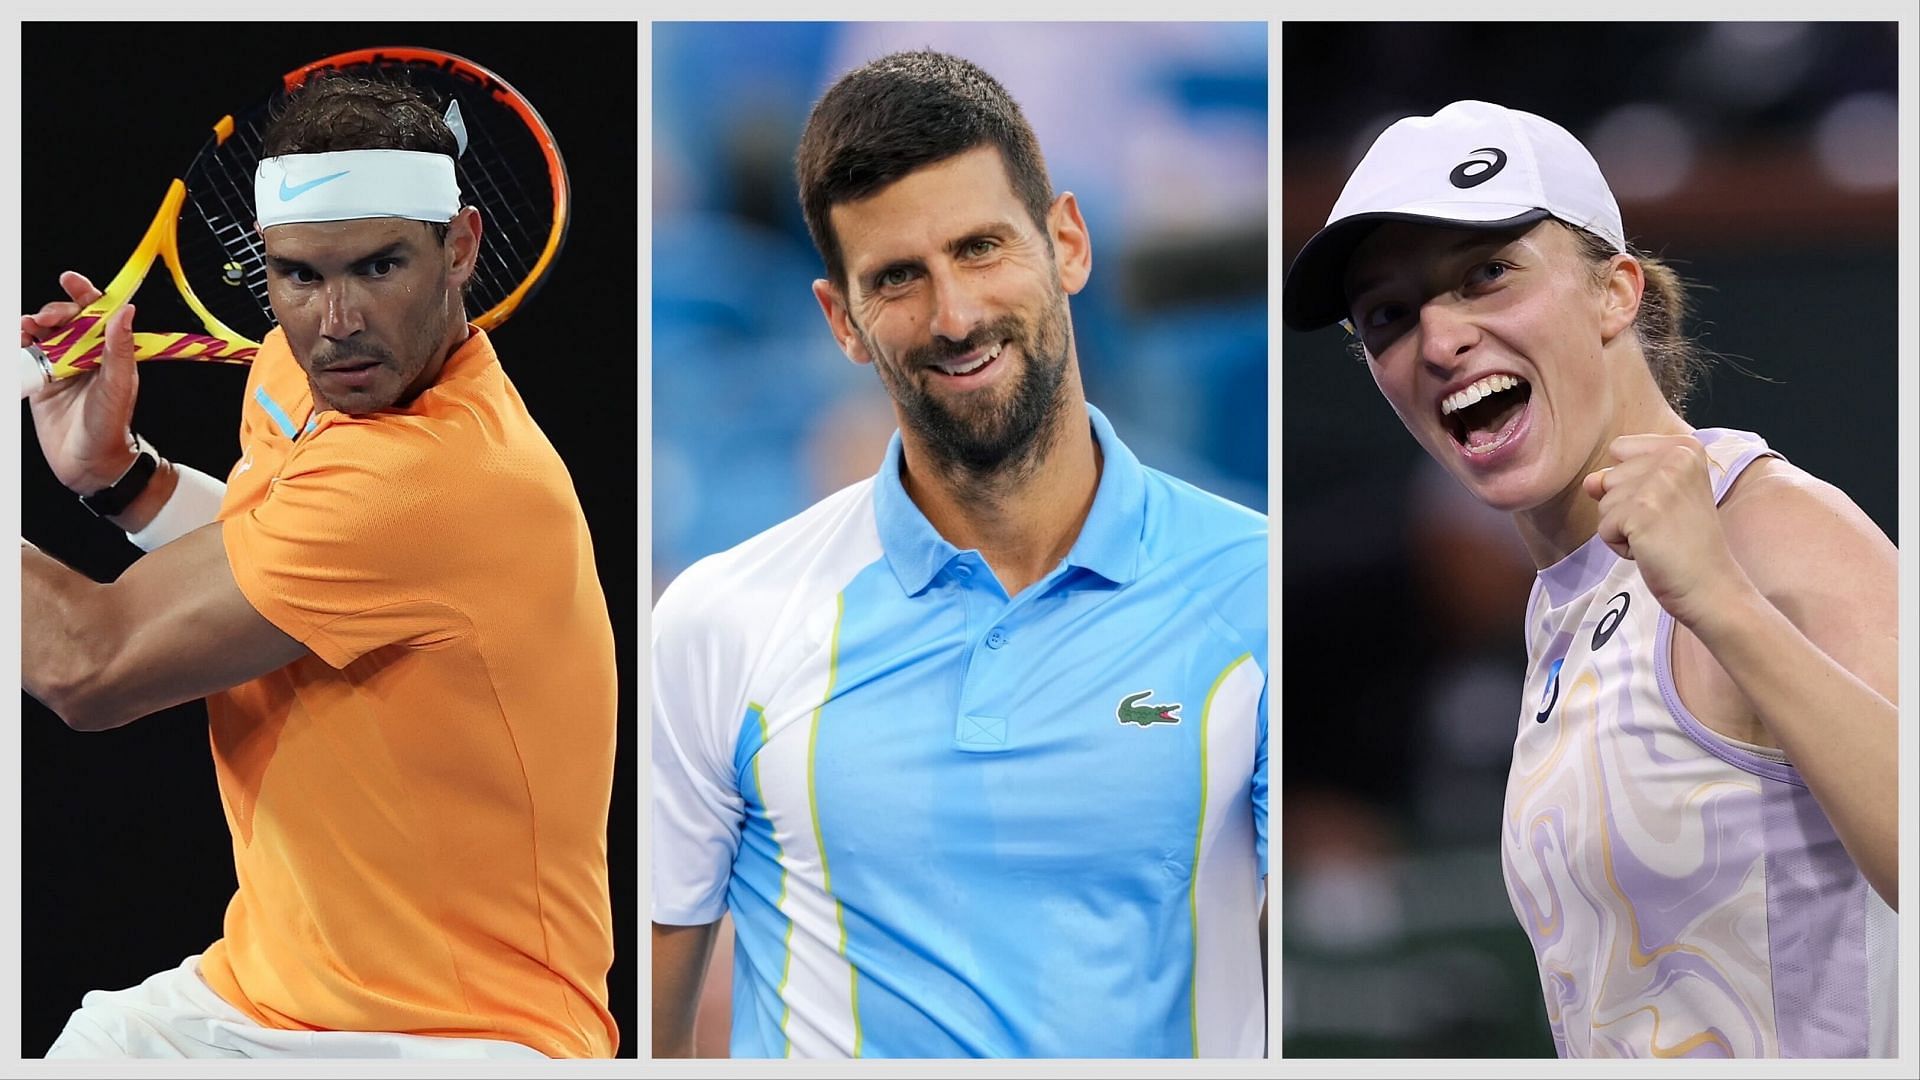 From L-R: Rafael Nadal, Novak Djokovic, and Iga Swiatek. (Photos: Getty)